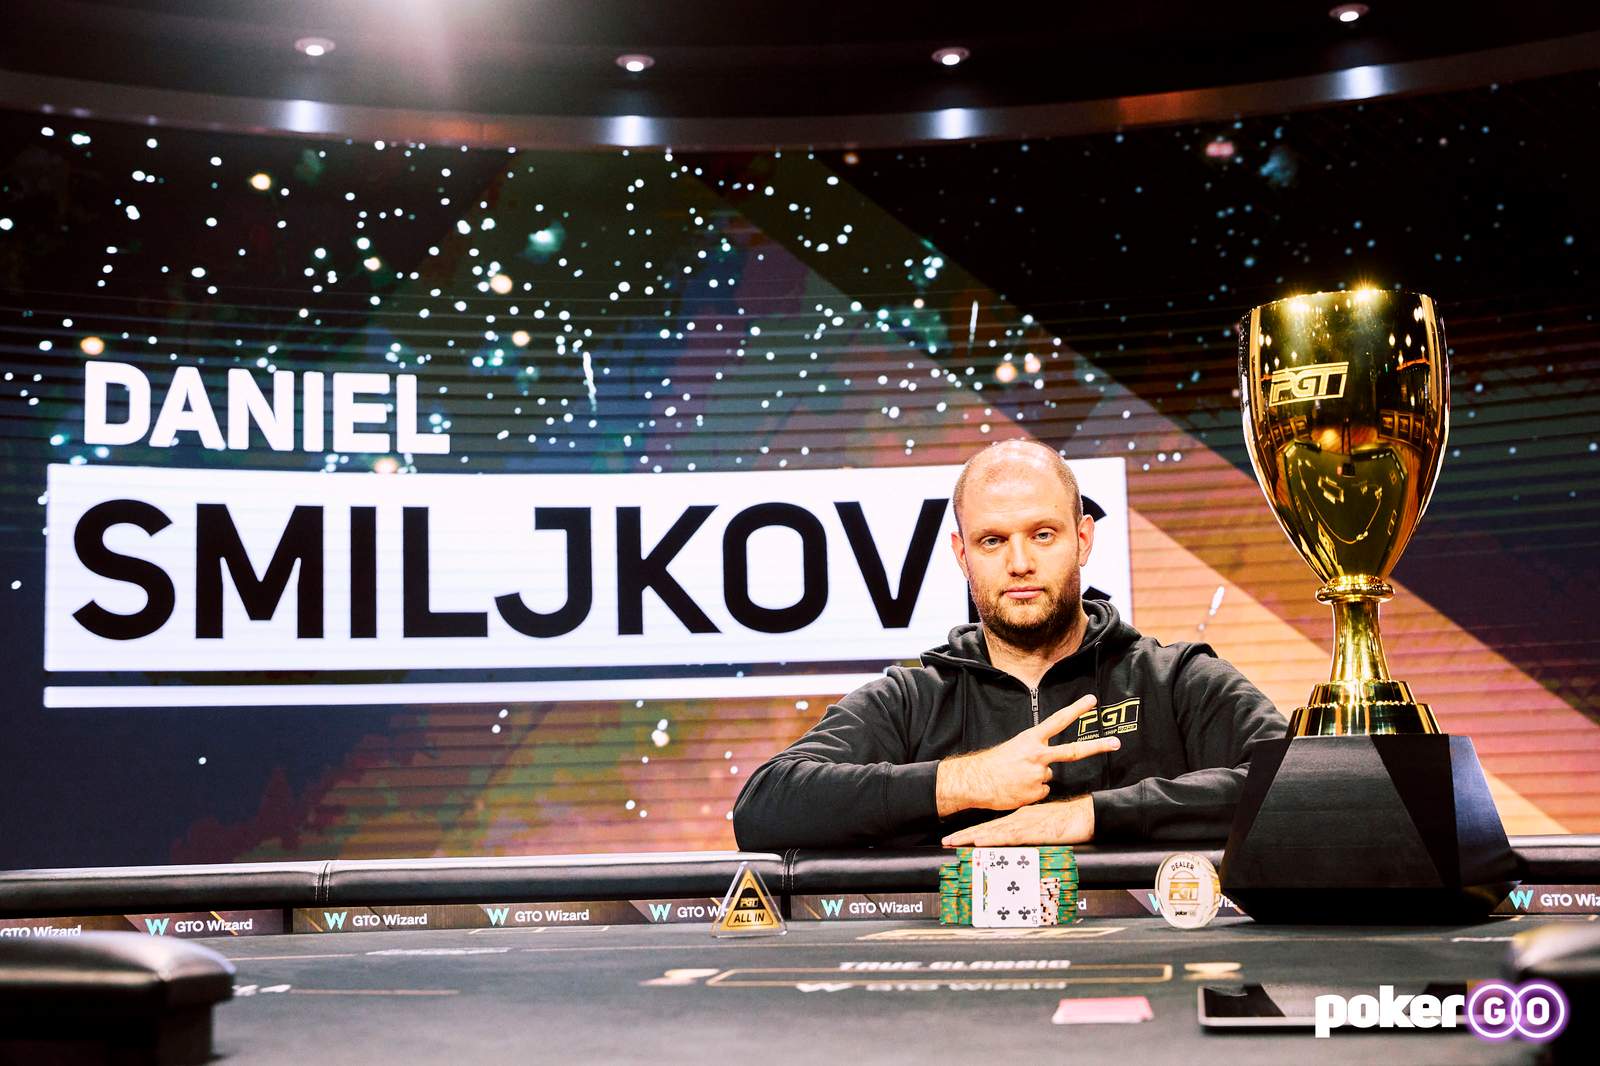 Daniel Smiljkovic Wins PGT Championship for $500,000